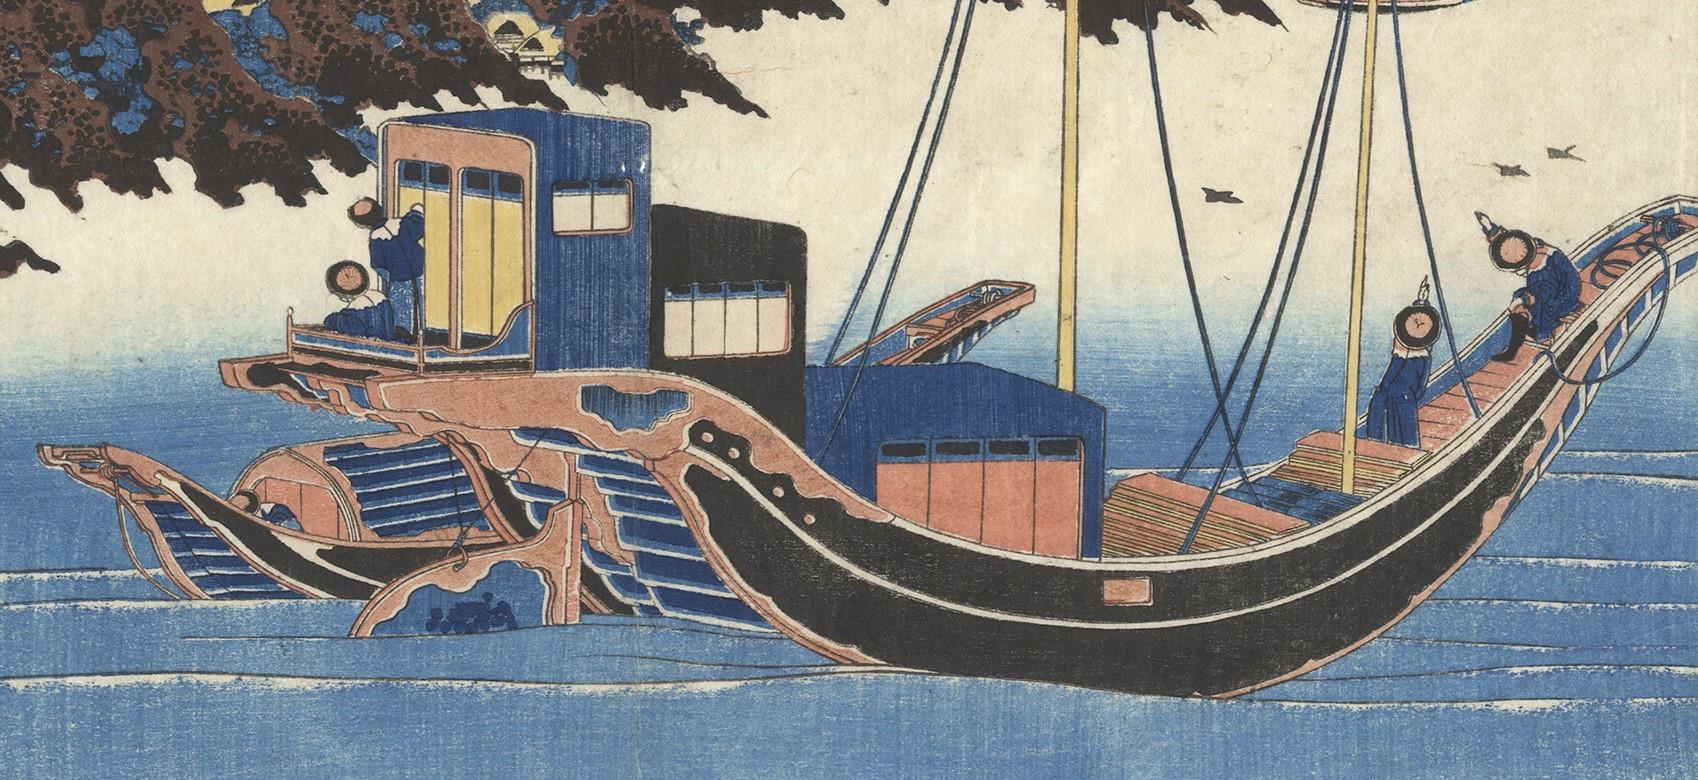 Katsushika Hokusai, Japanese Woodblock Print, Boats, Ukiyo-e, Tanka Poem, Edo For Sale 2